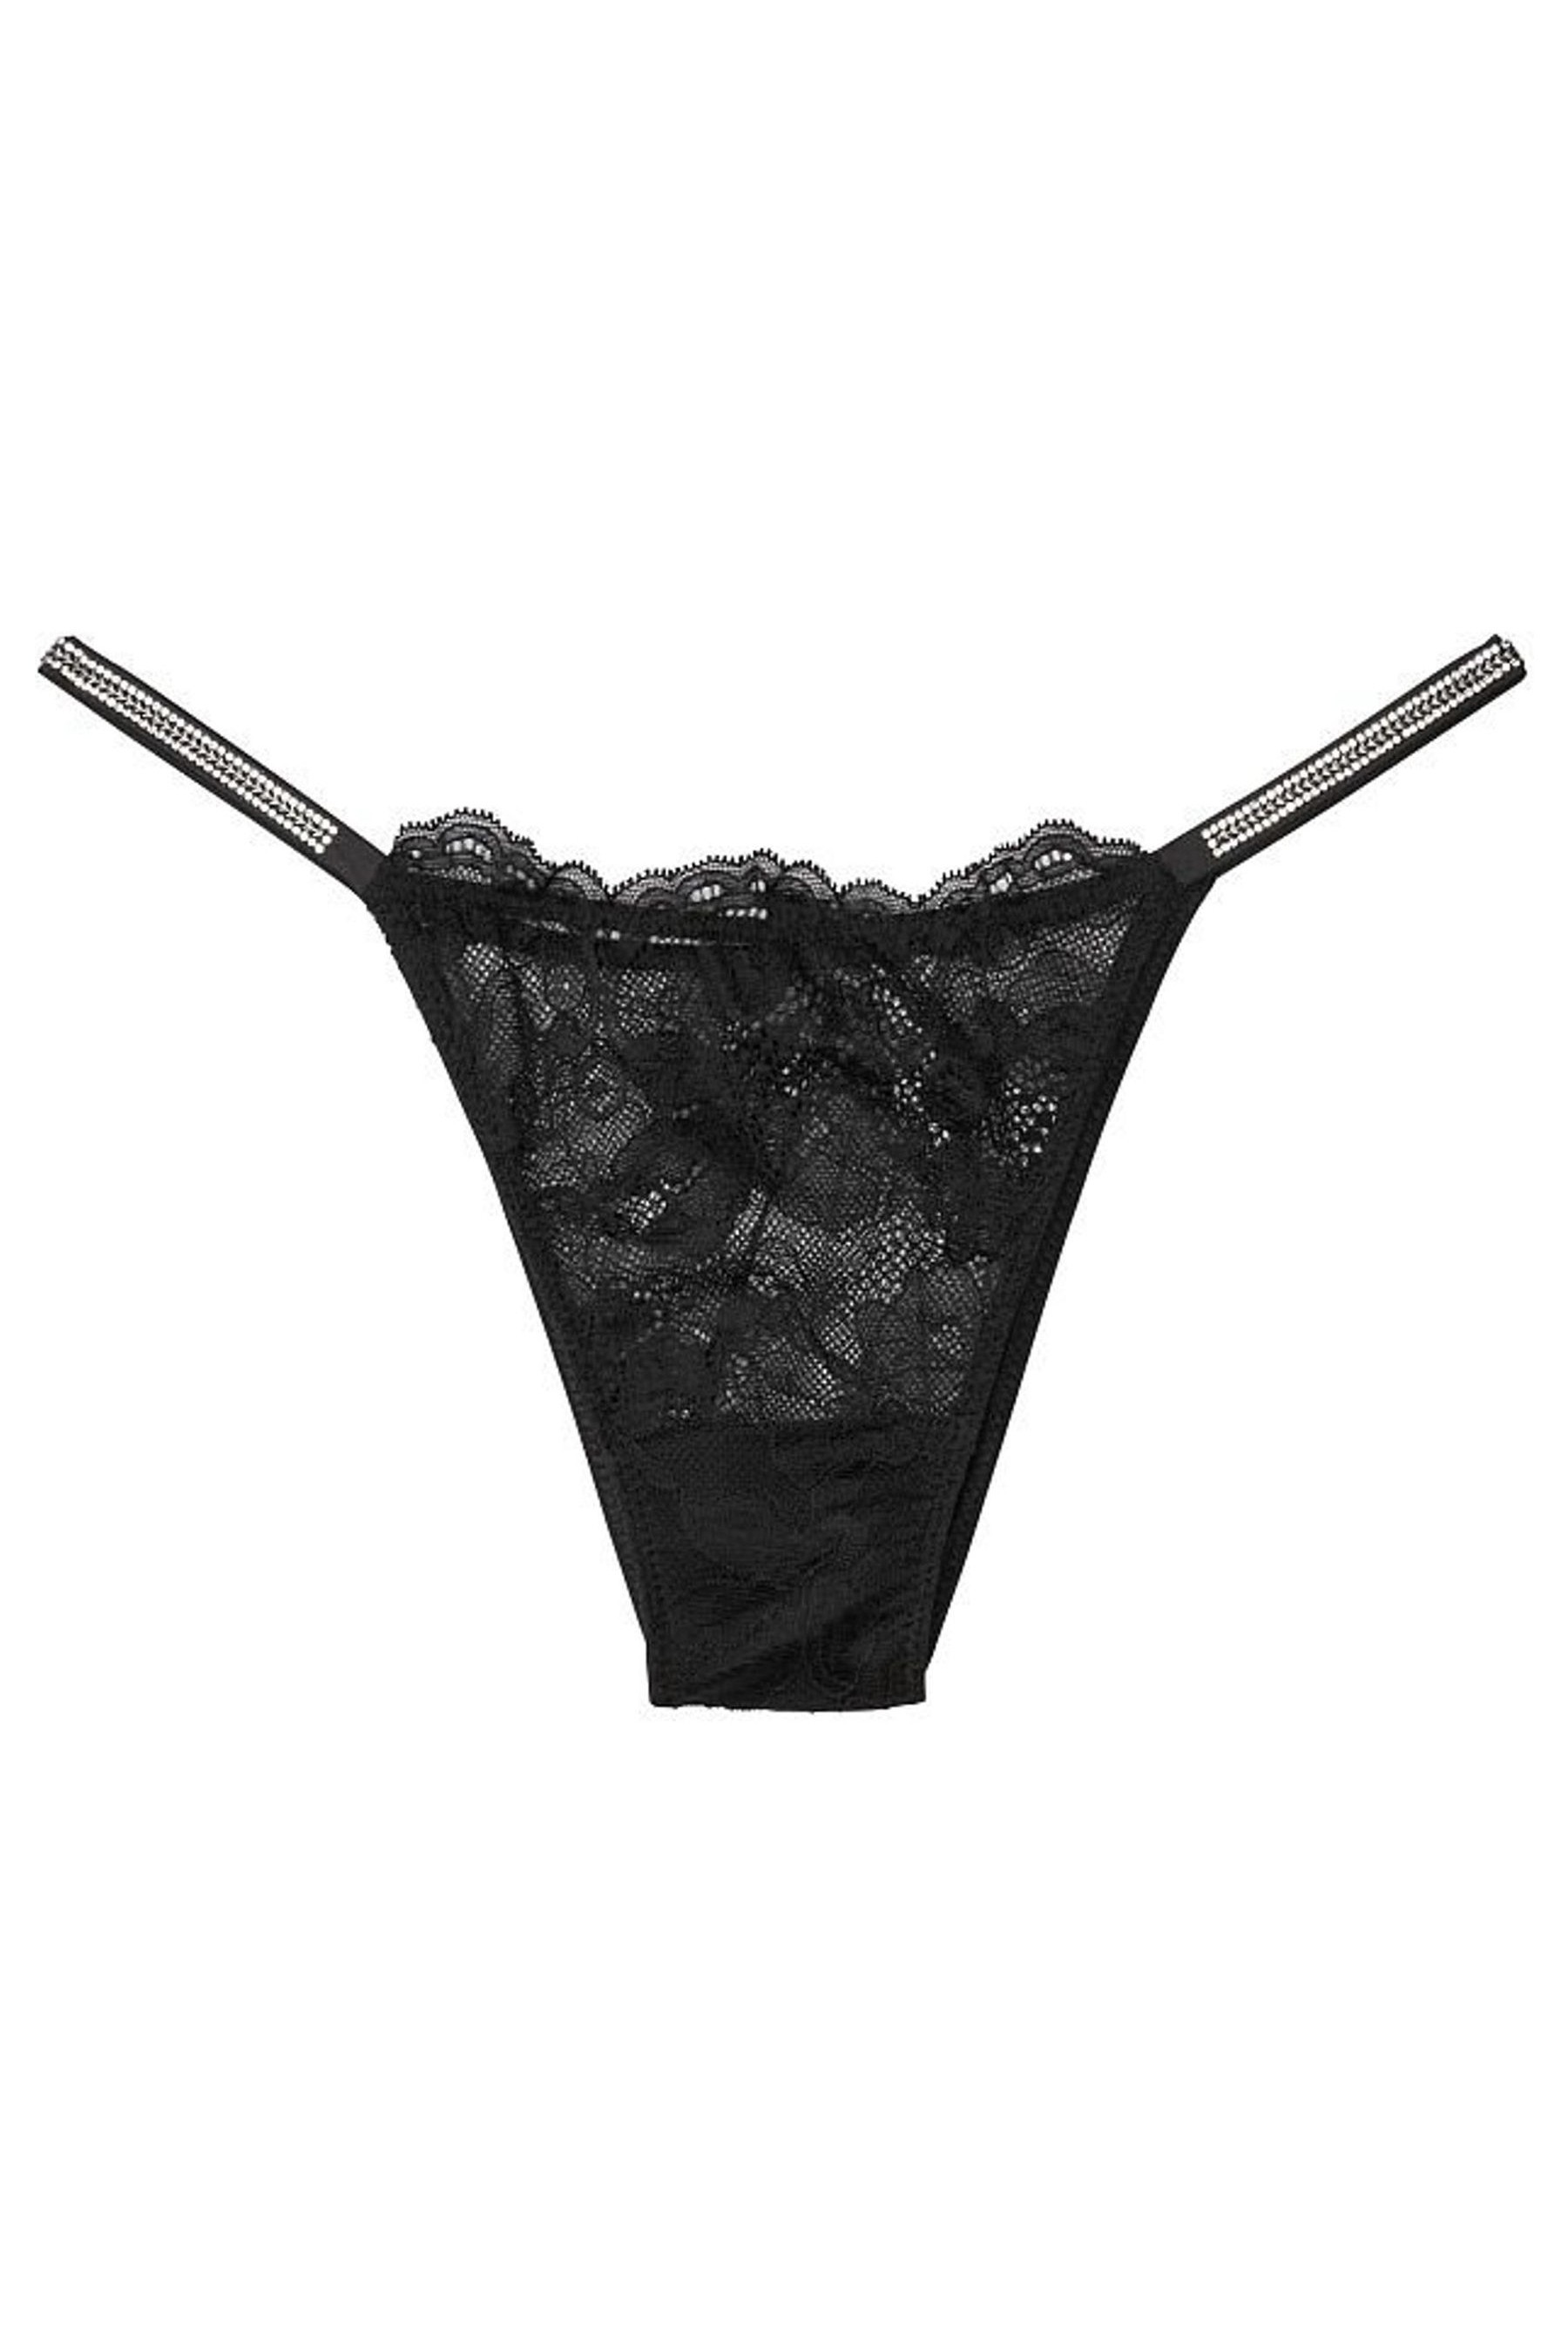 Buy Victoria S Secret Lace Shine Strap Brazilian Panty From The Victoria S Secret Uk Online Shop